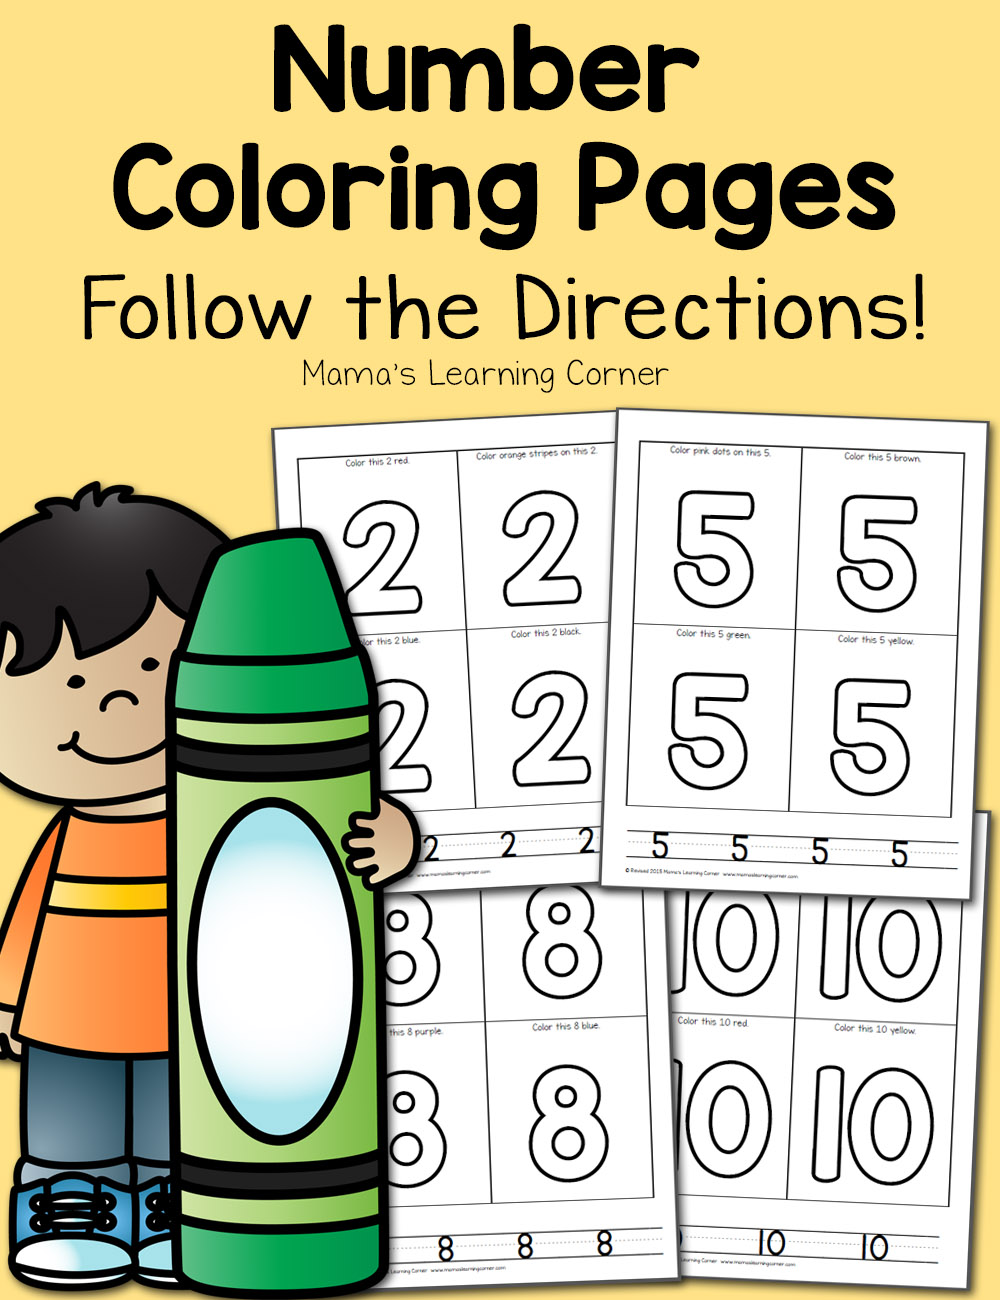 preschool coloring pages